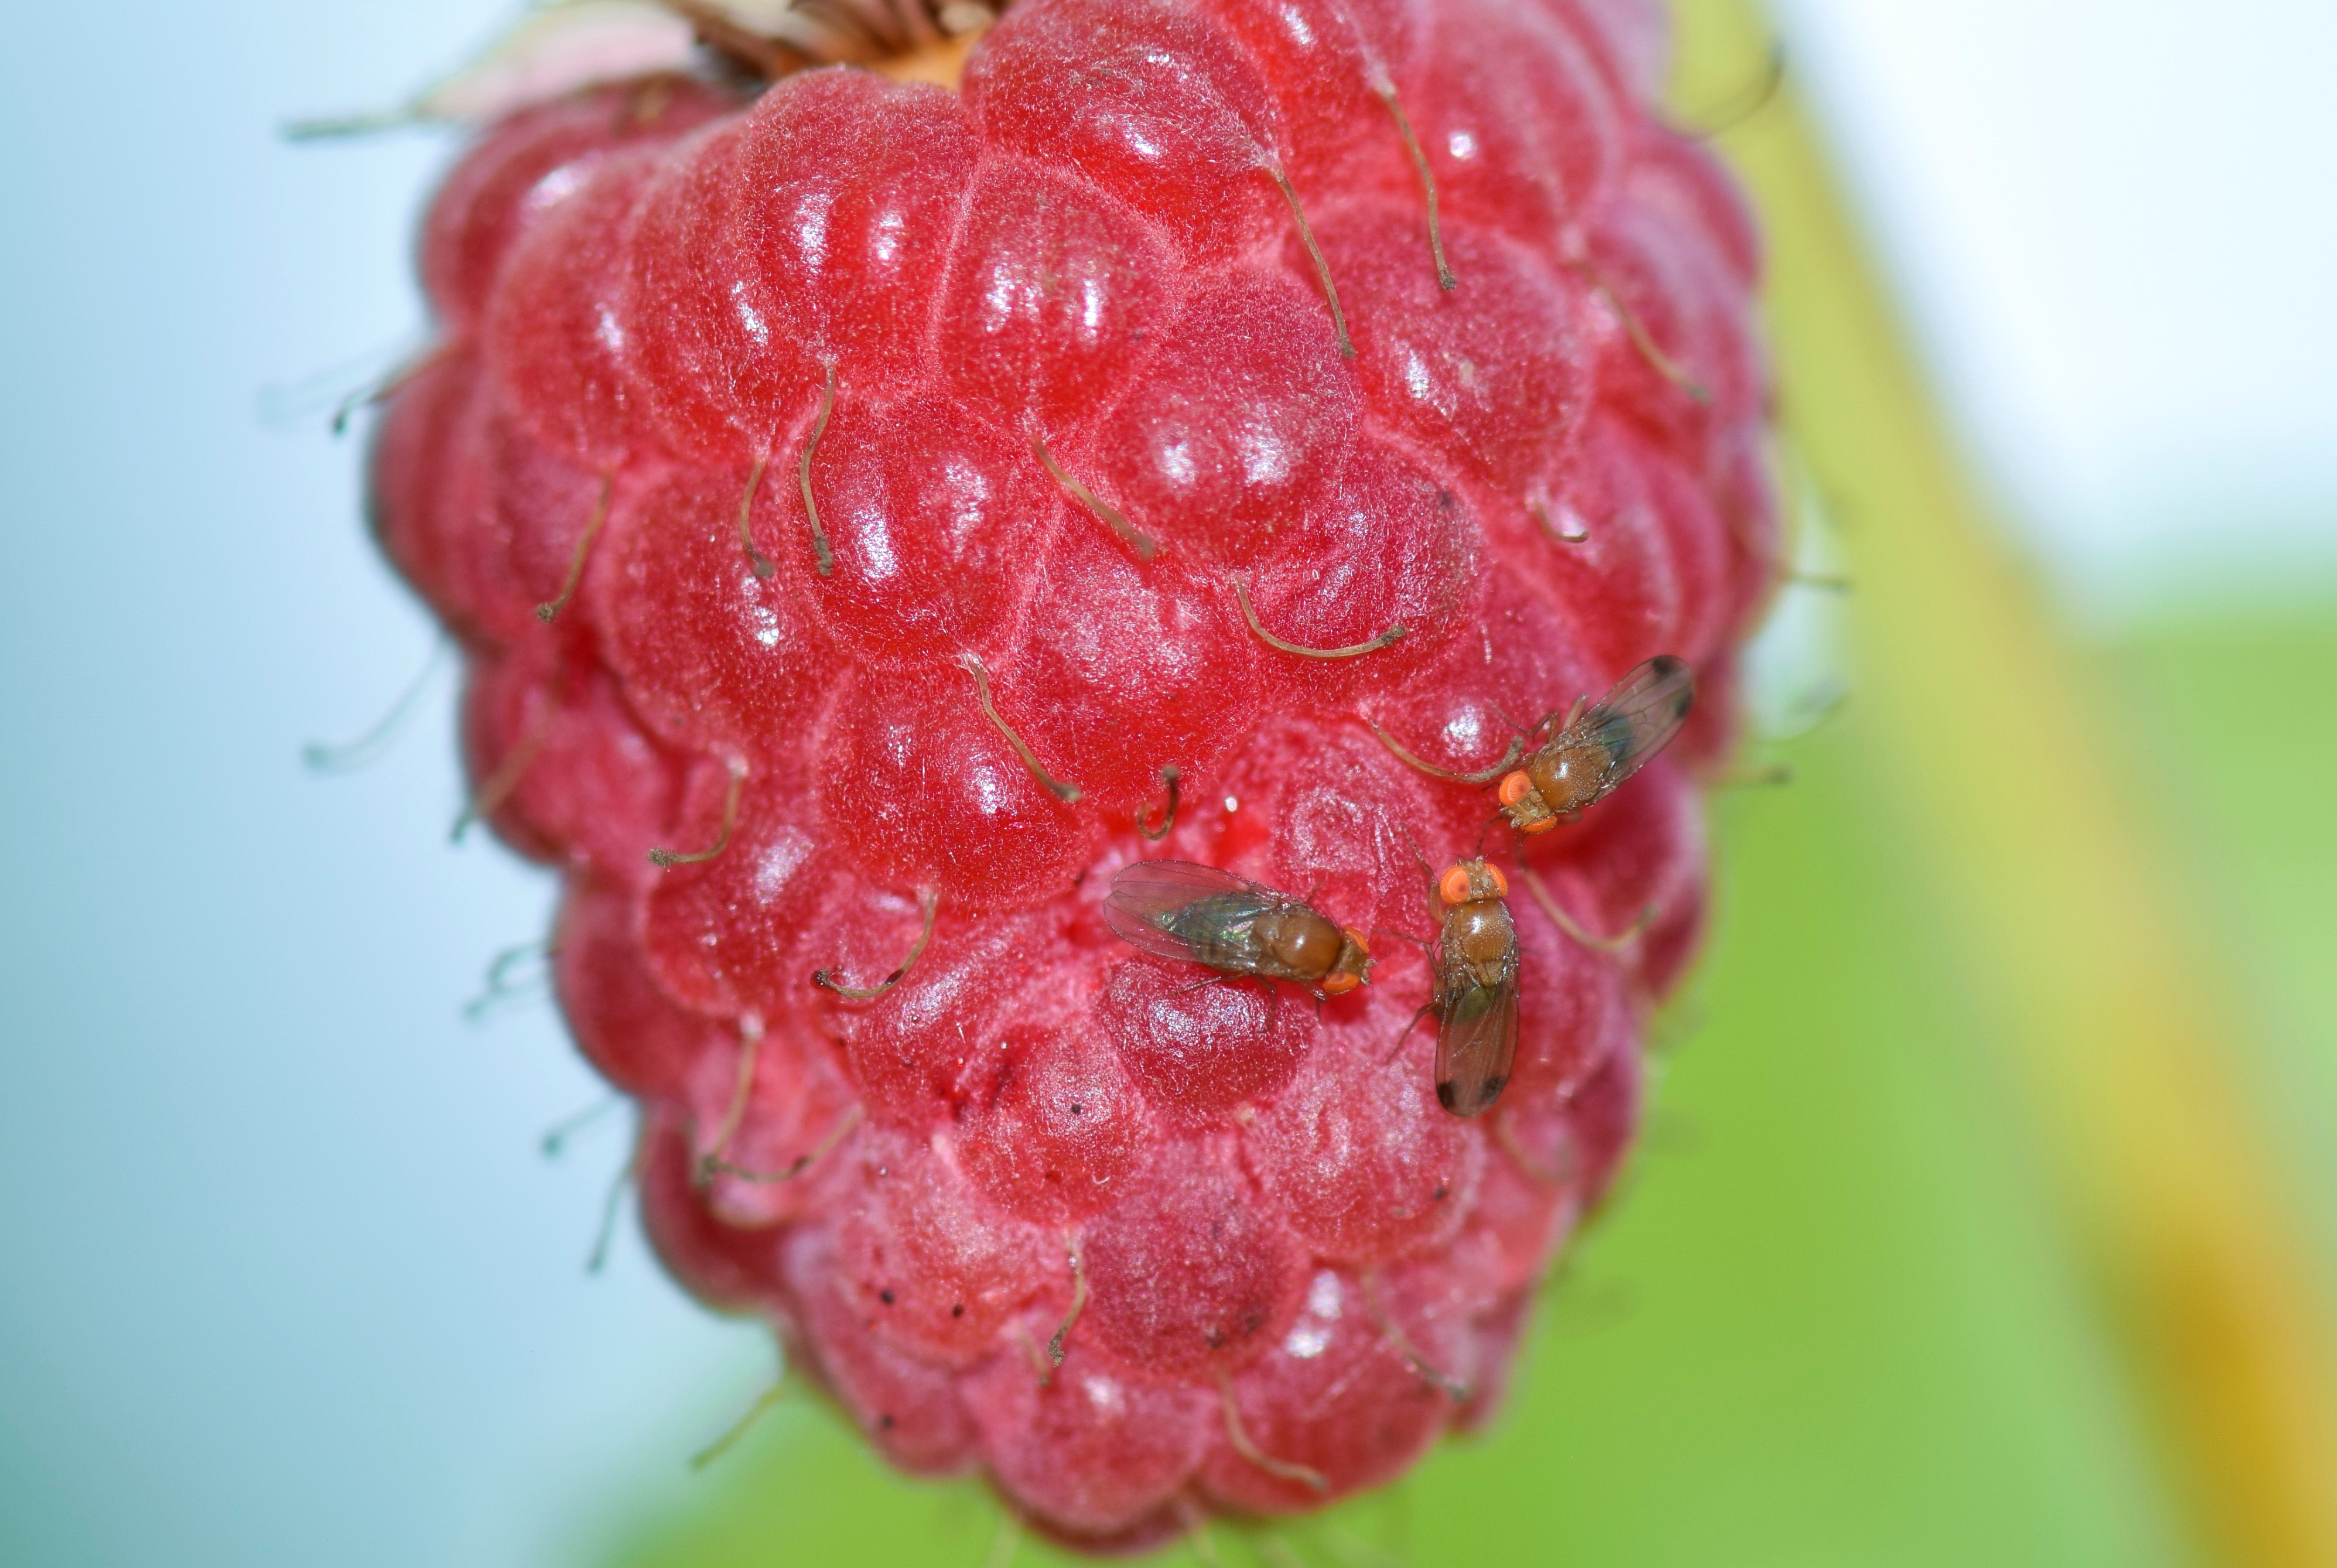 SWD adult flies on a raspberry